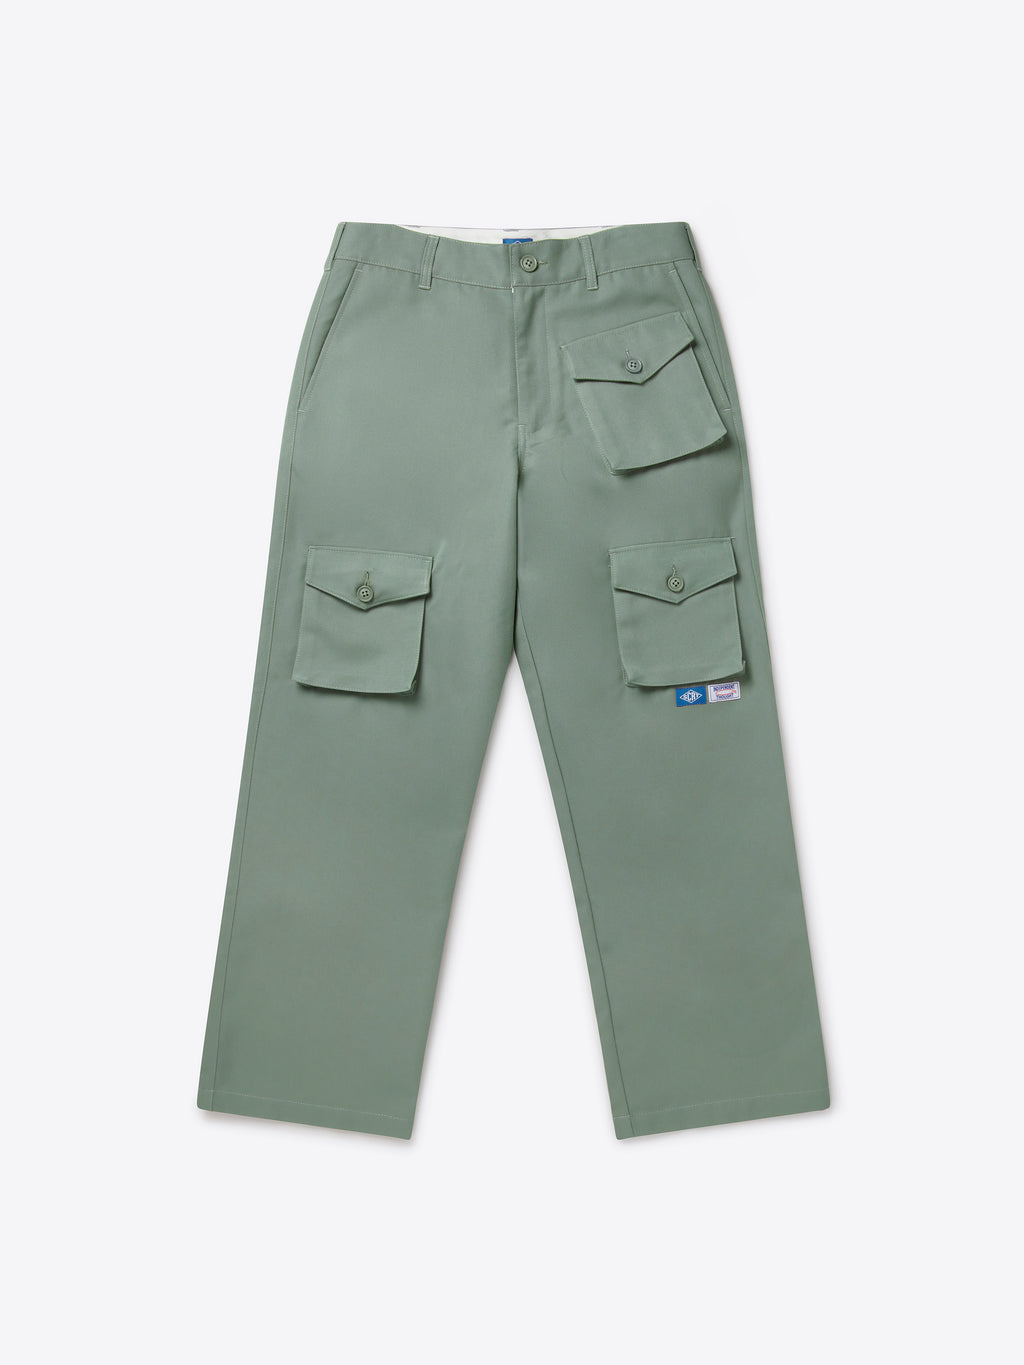 Pocket Set Trousers - Limestone